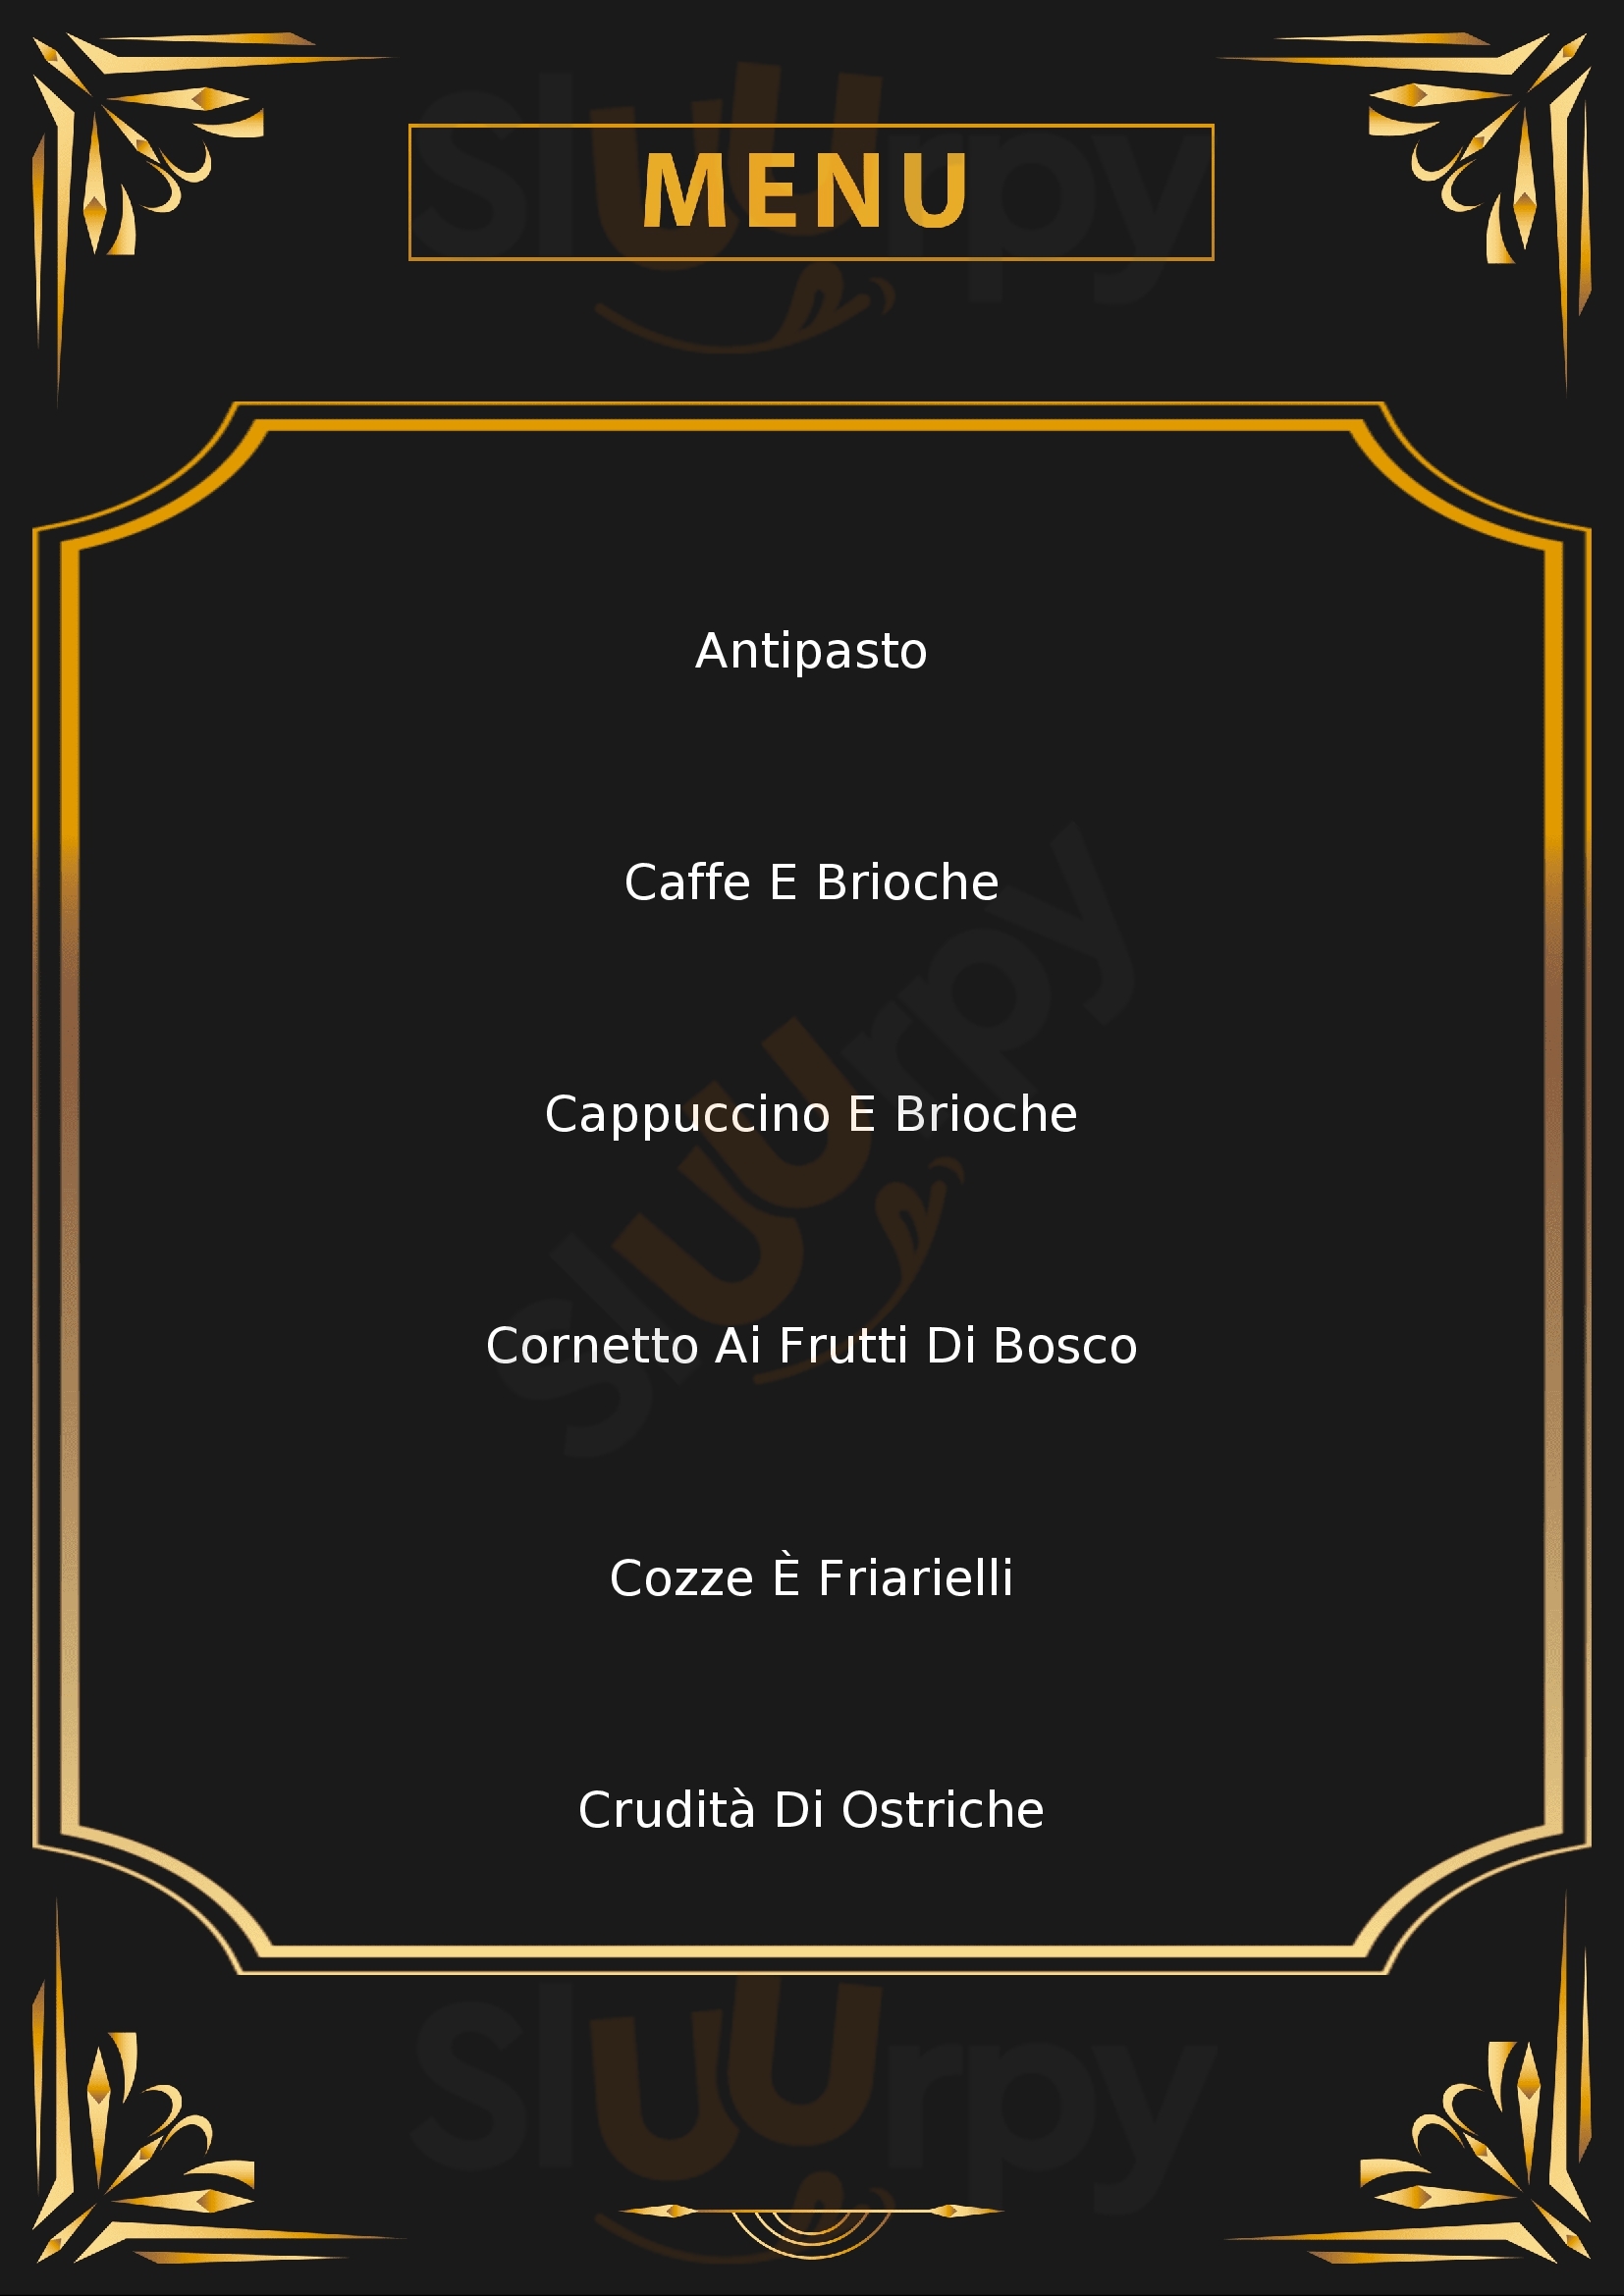 Calili Cafe' Rubiera menù 1 pagina